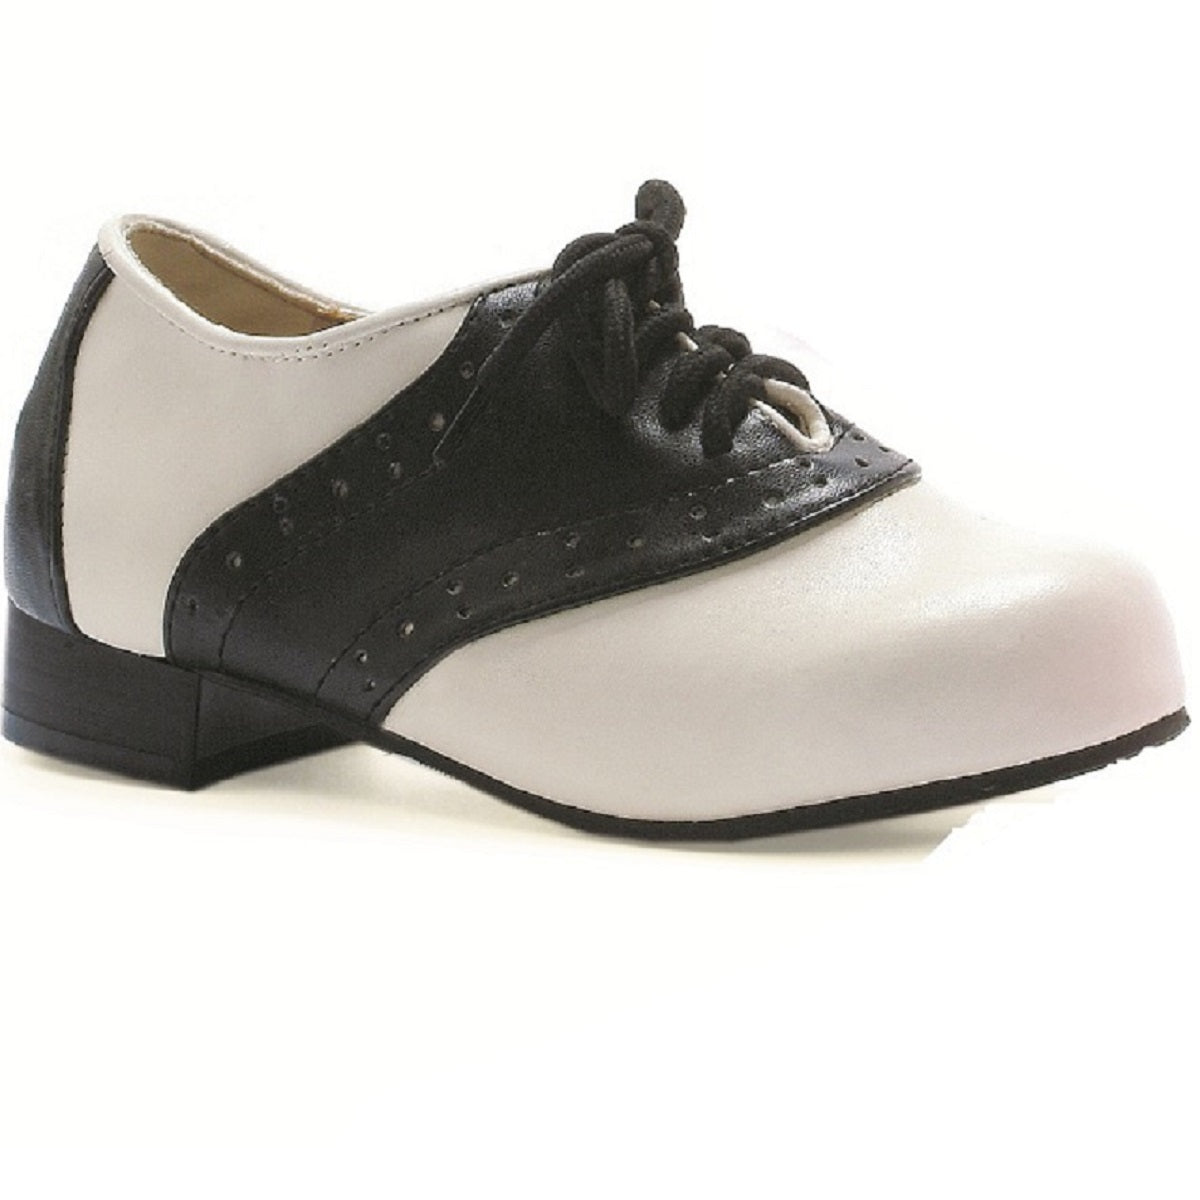 1" Heel 2-Tone Saddle Shoe